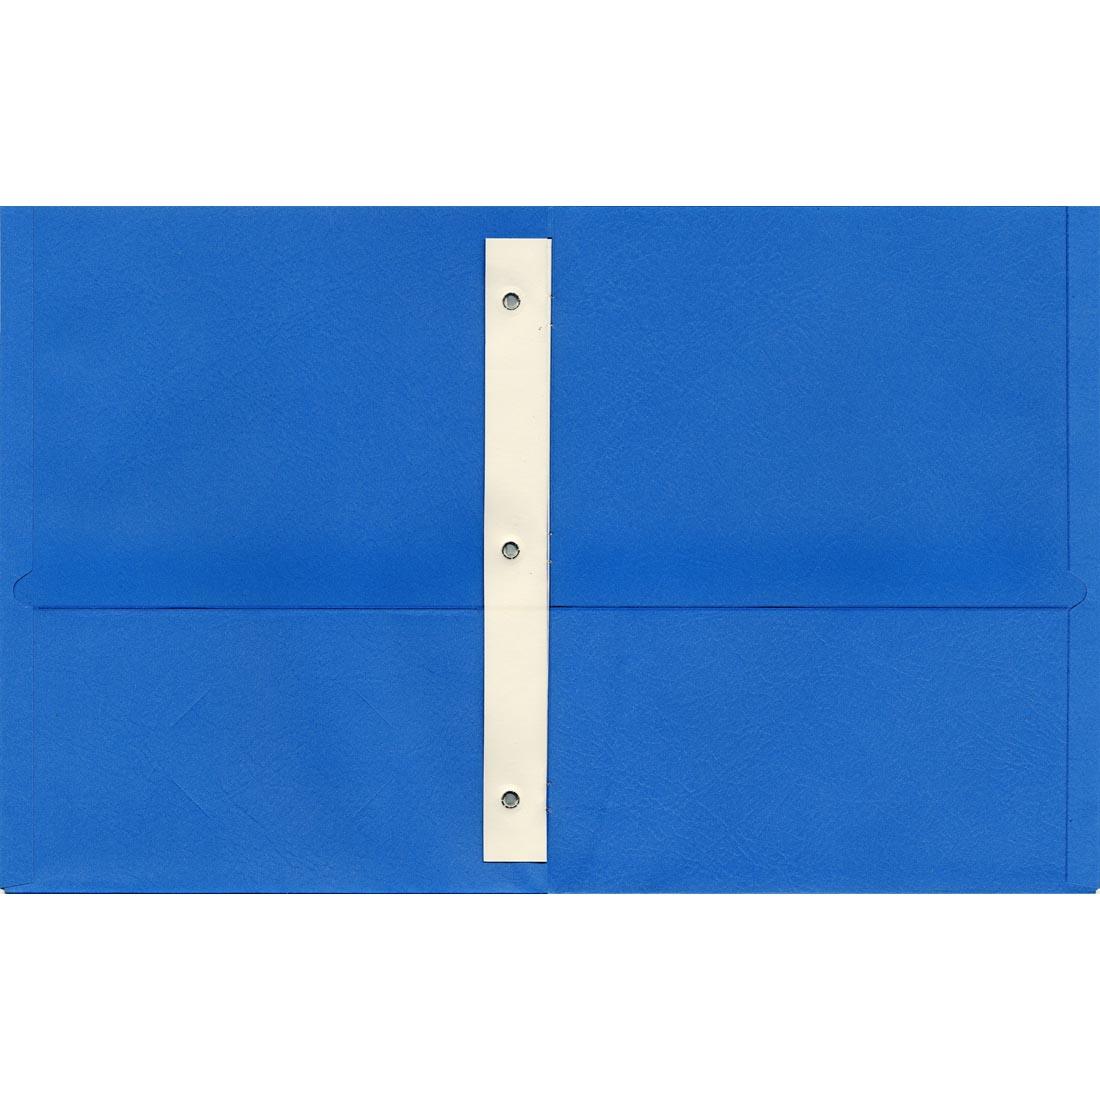 Light Blue Oxford Twin Pocket Portfolio With Fasteners shown open